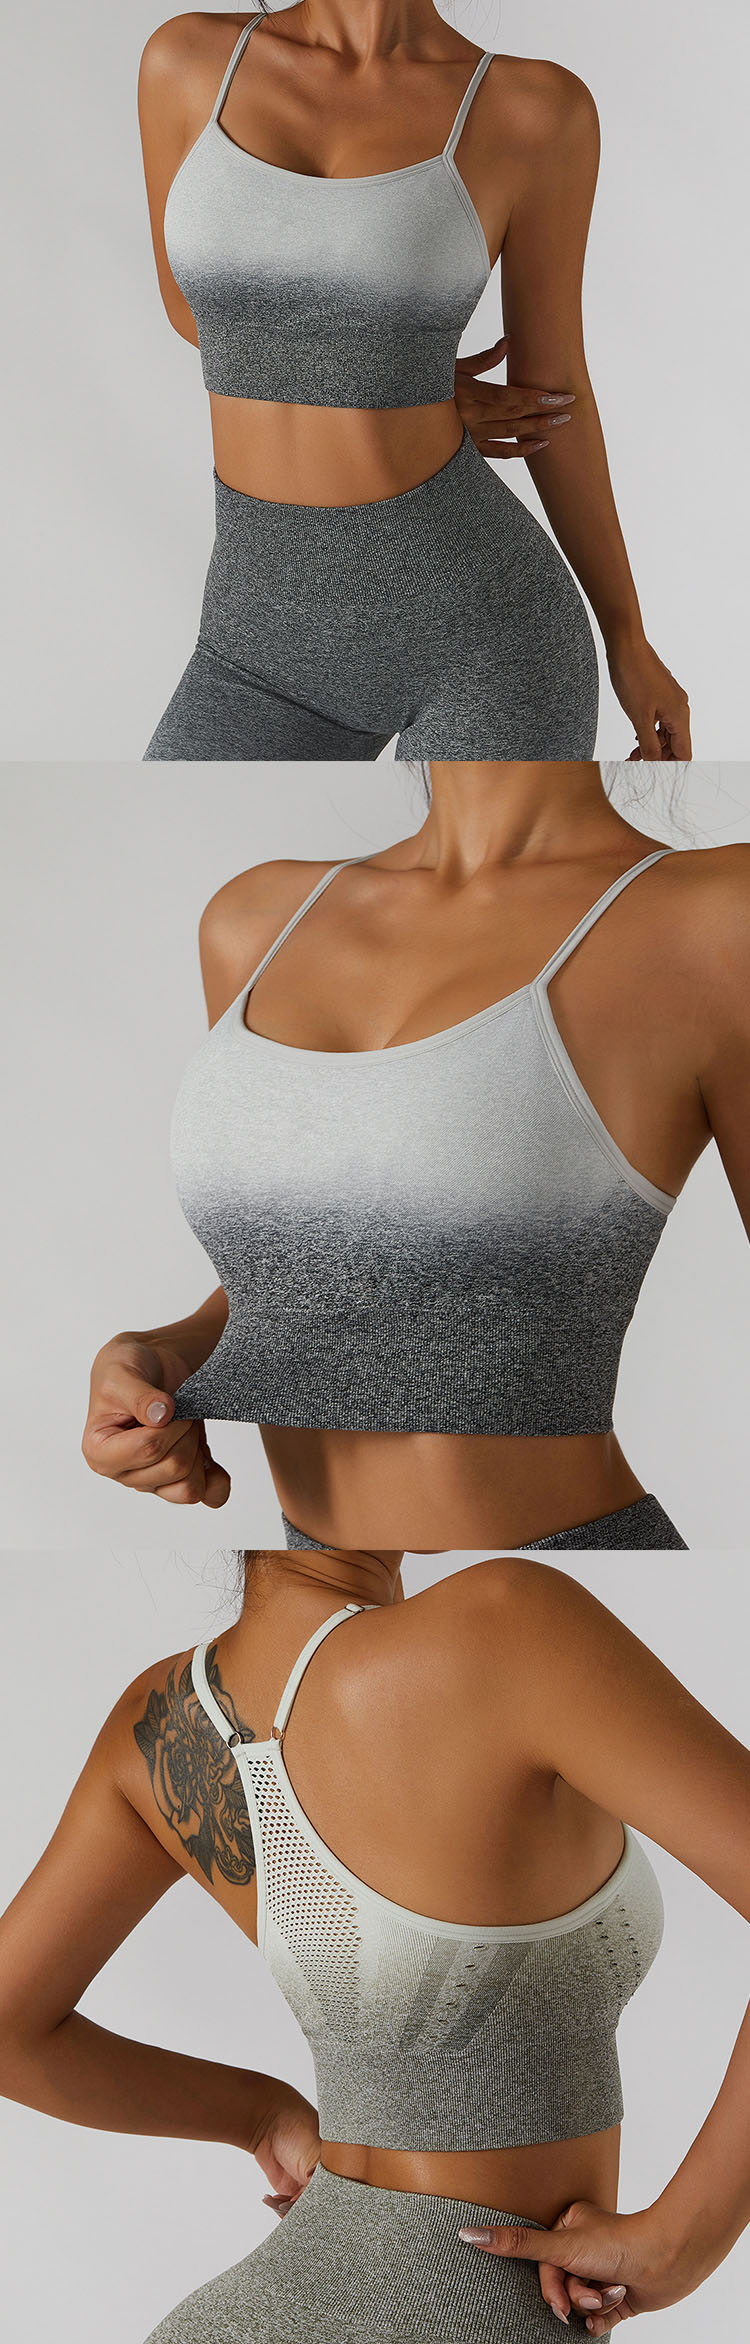 Best sports bra for running large breasts - Activewear manufacturer  Sportswear Manufacturer HL